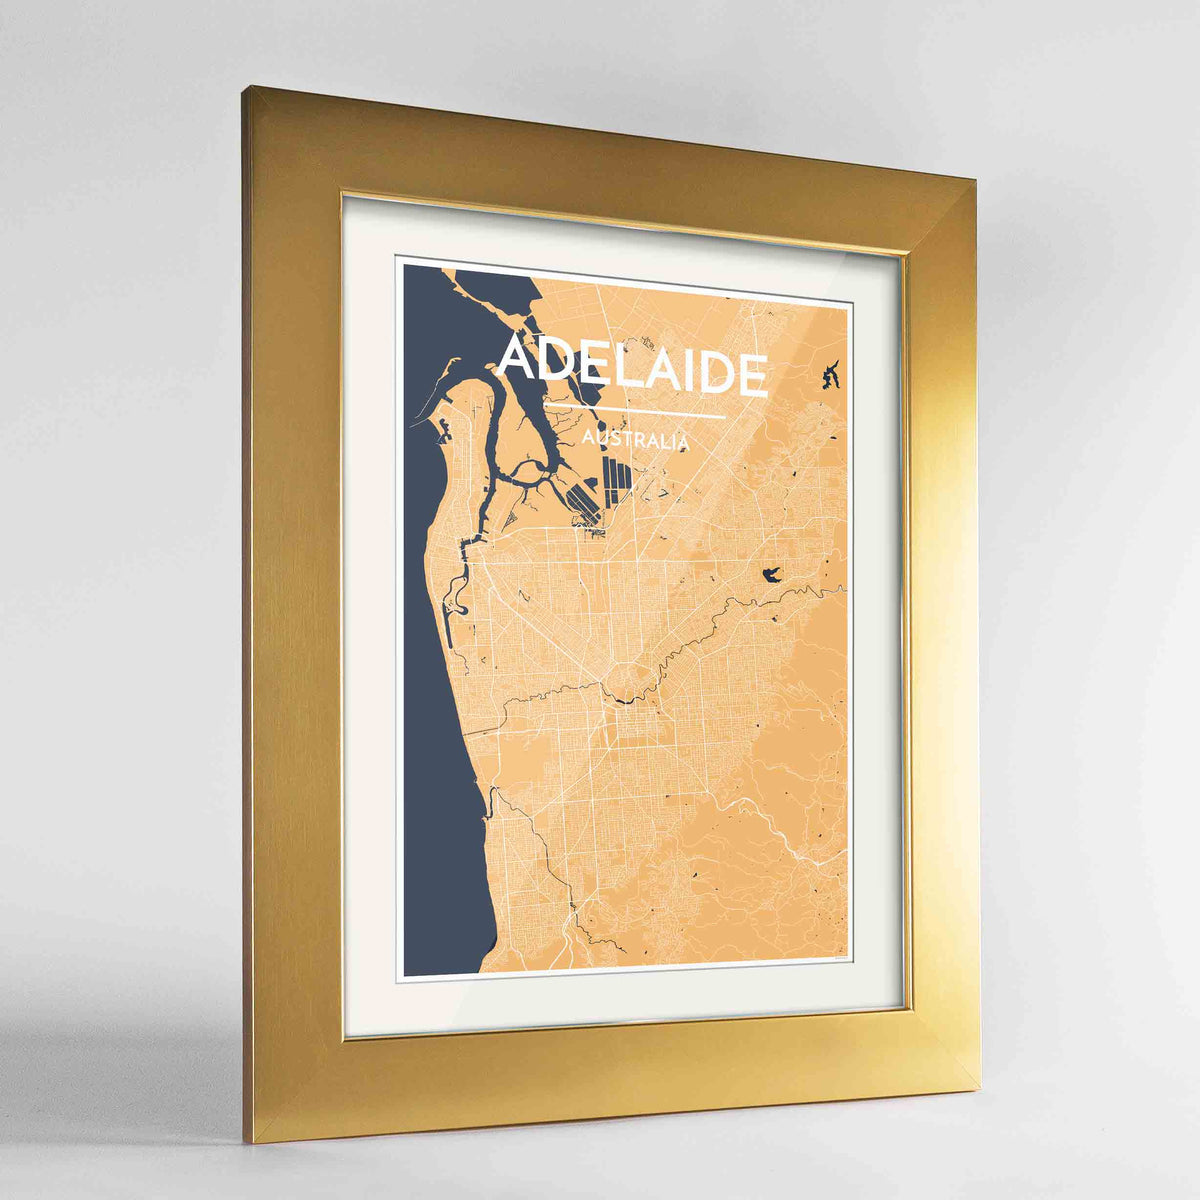 Framed Adelaide Map Art Print 24x36&quot; Gold frame Point Two Design Group